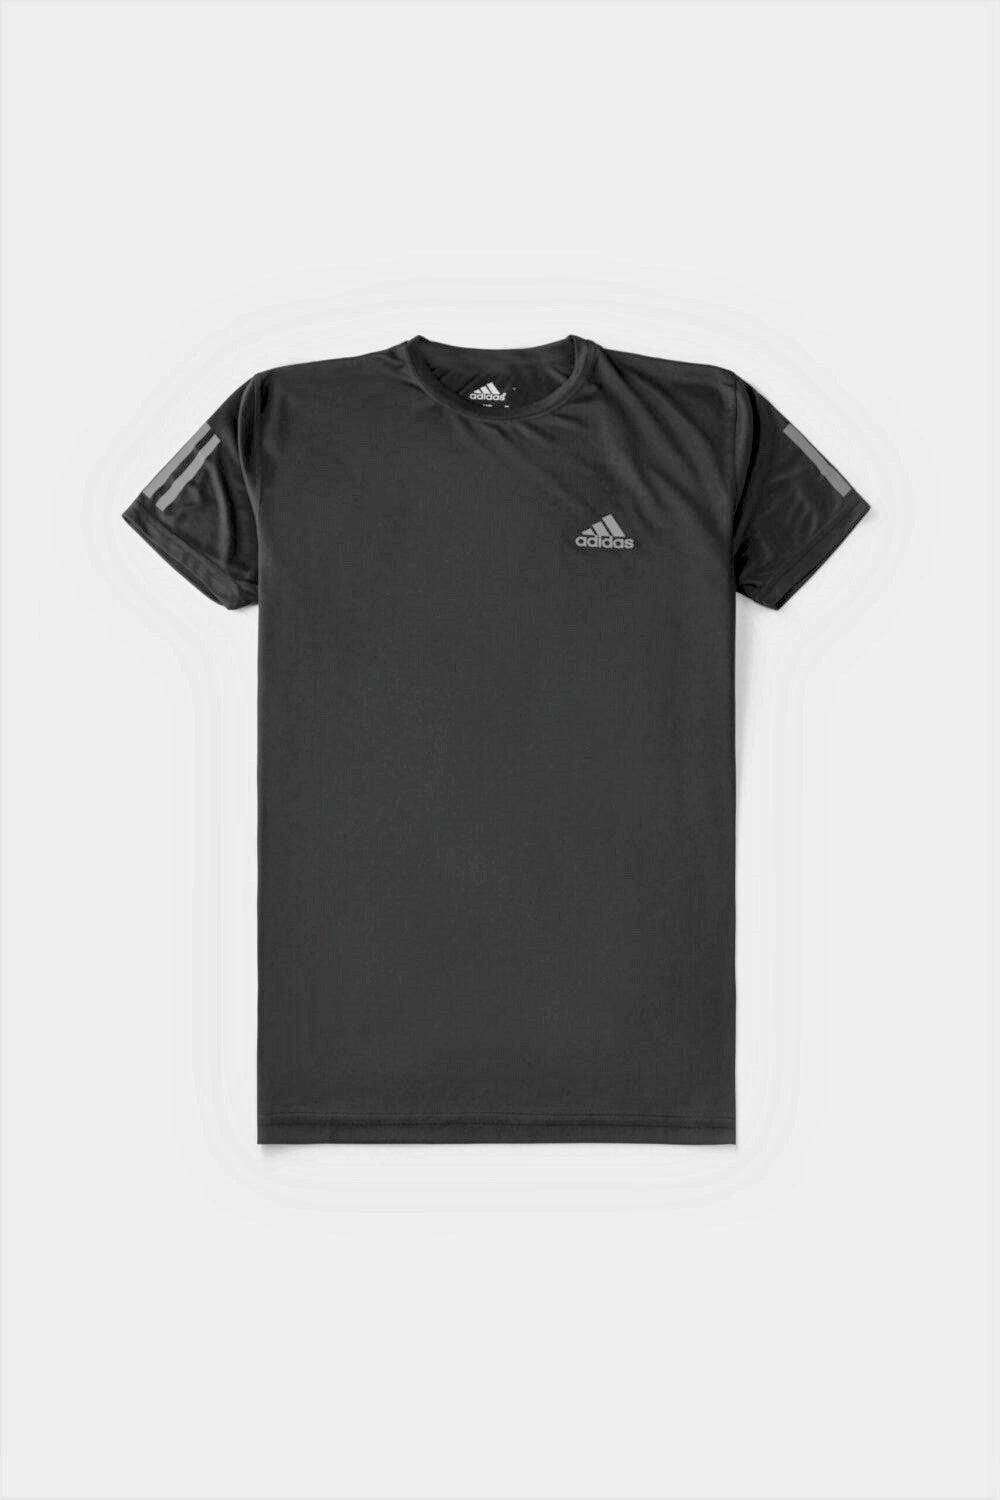 Adidas Premium Sports T Shirt – Dark Grey